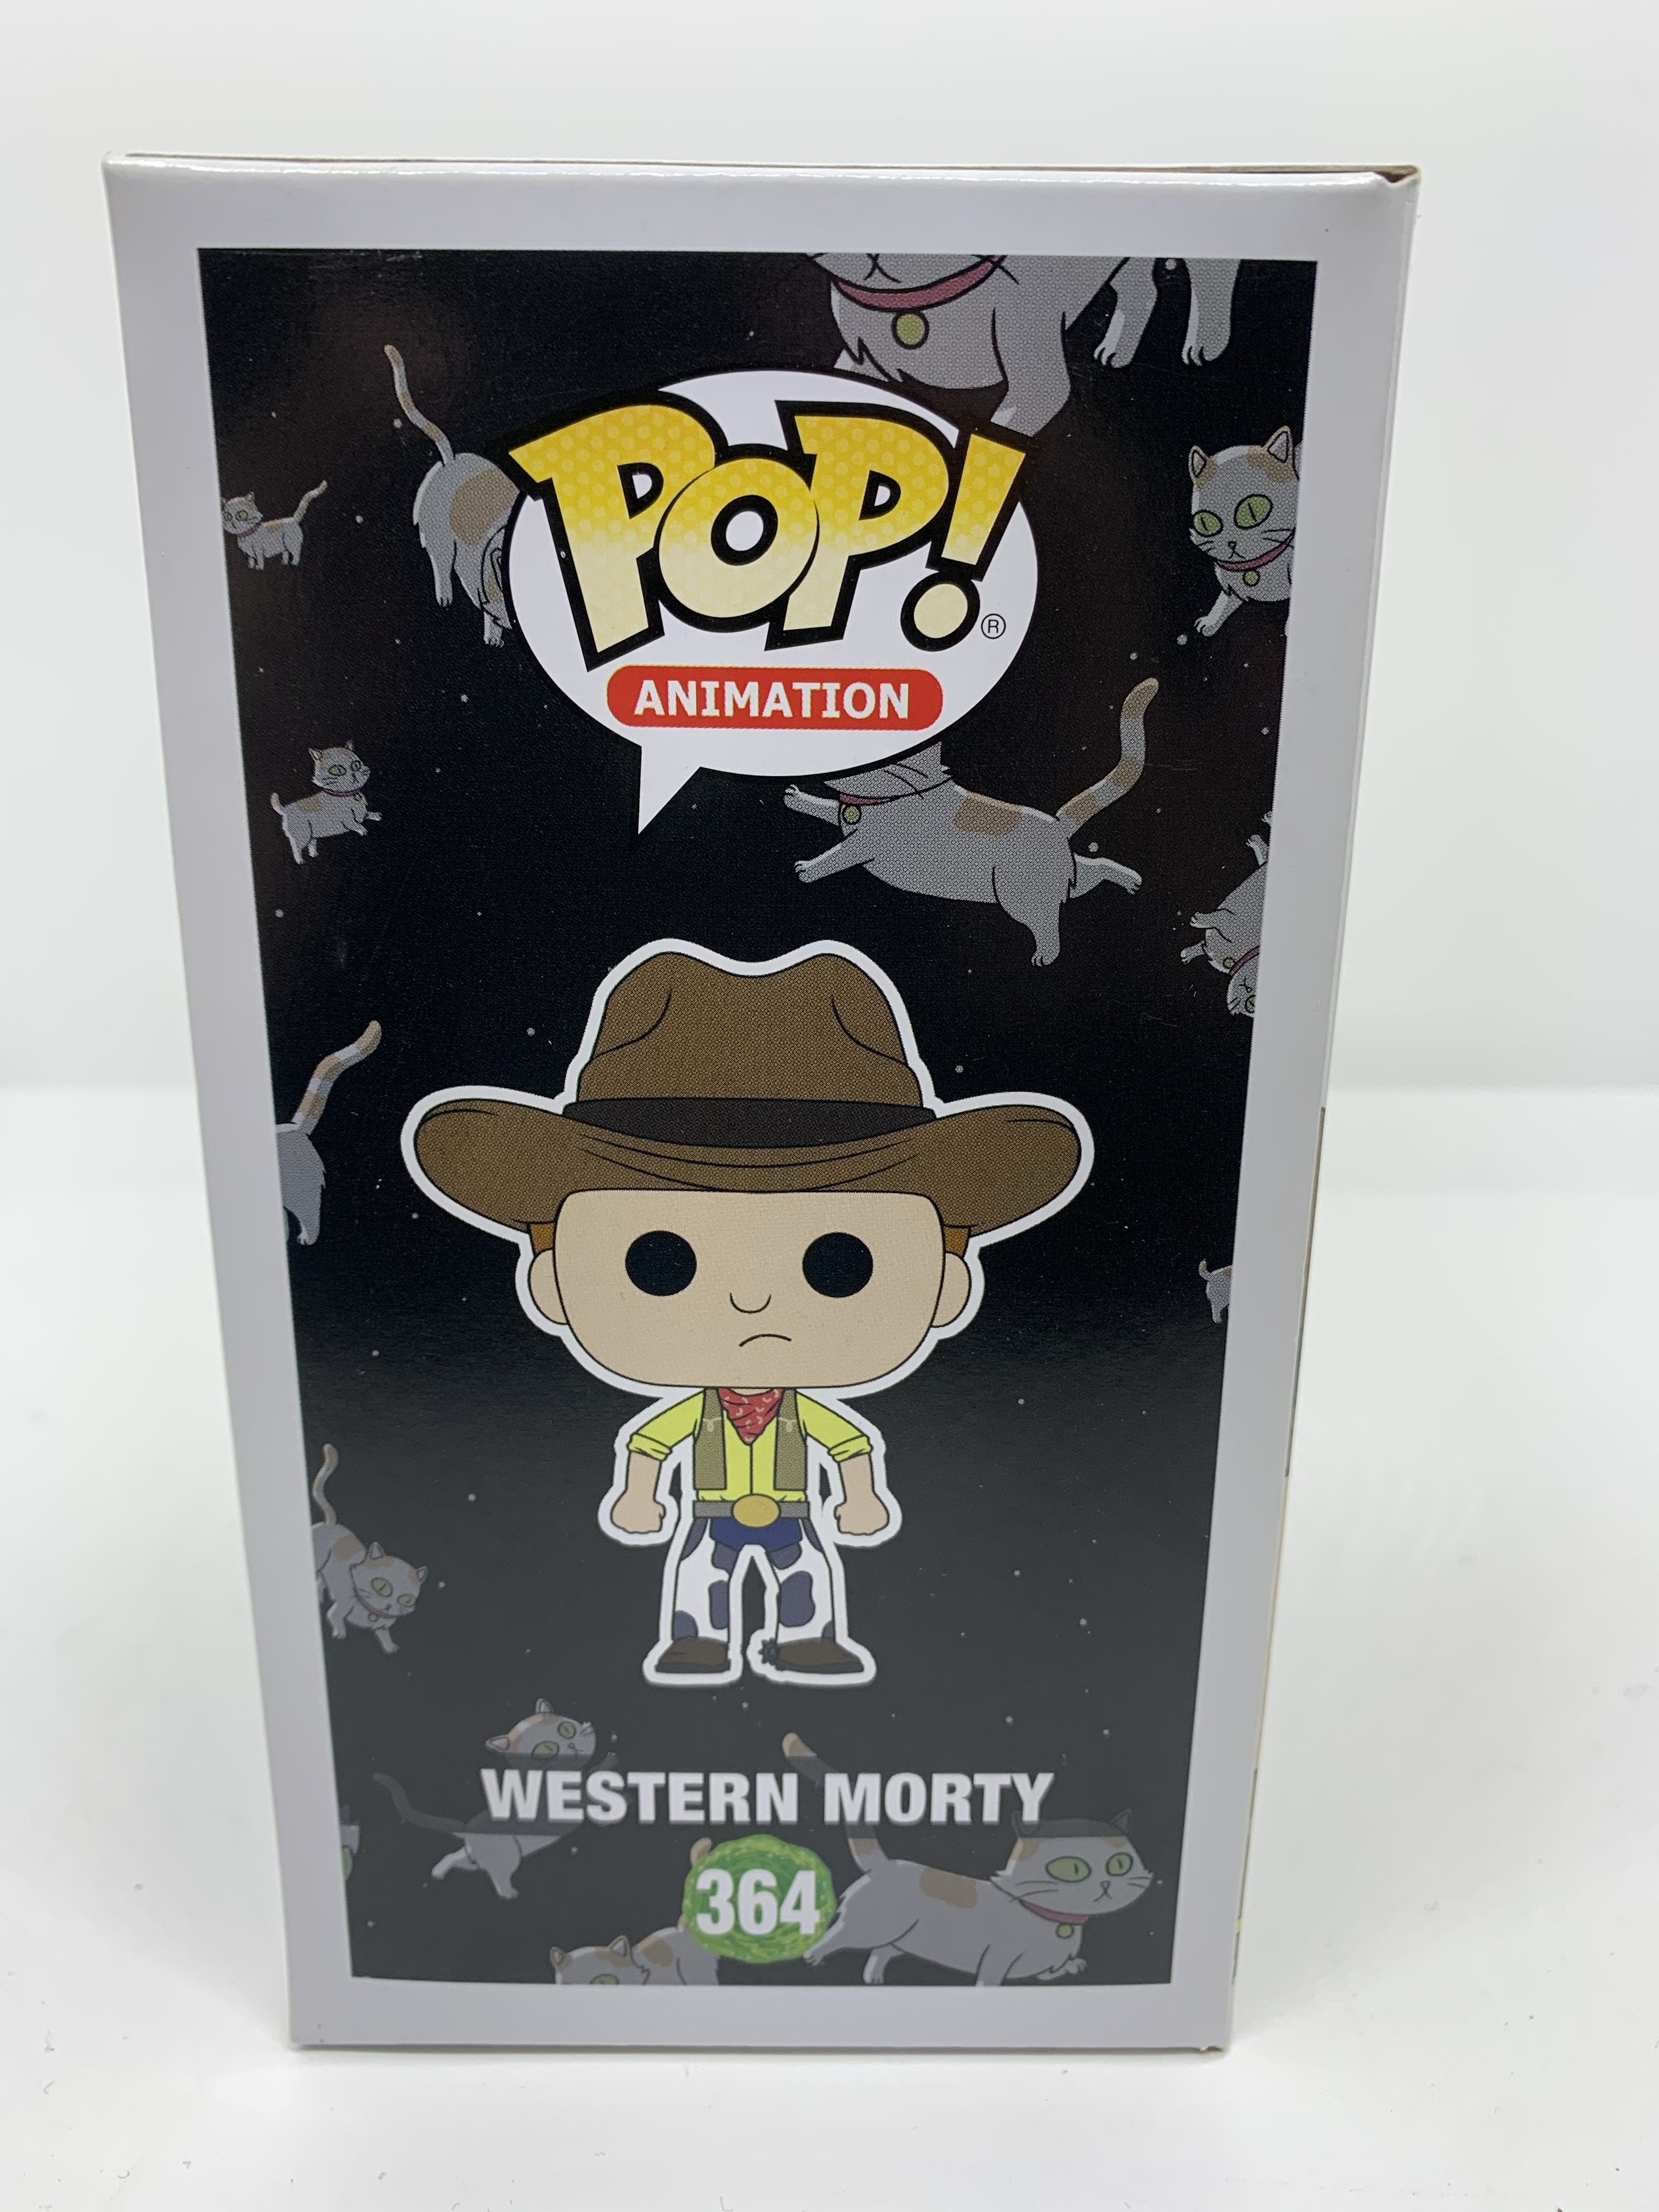 Funko Rick POP! Western Morty Vinyl Figure - Walmart.com